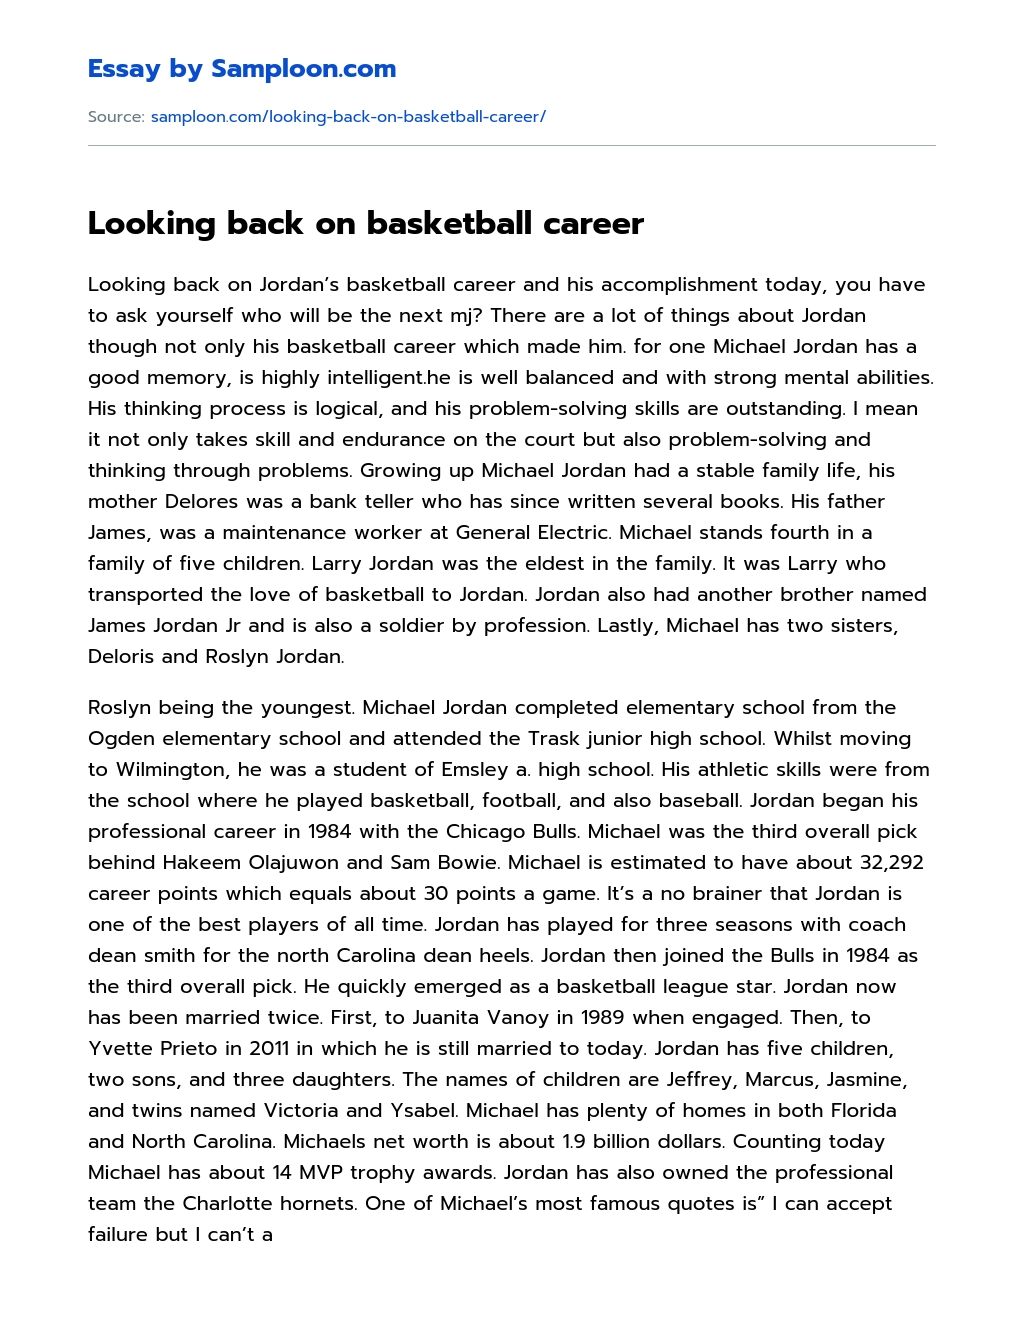 Looking back on basketball career essay